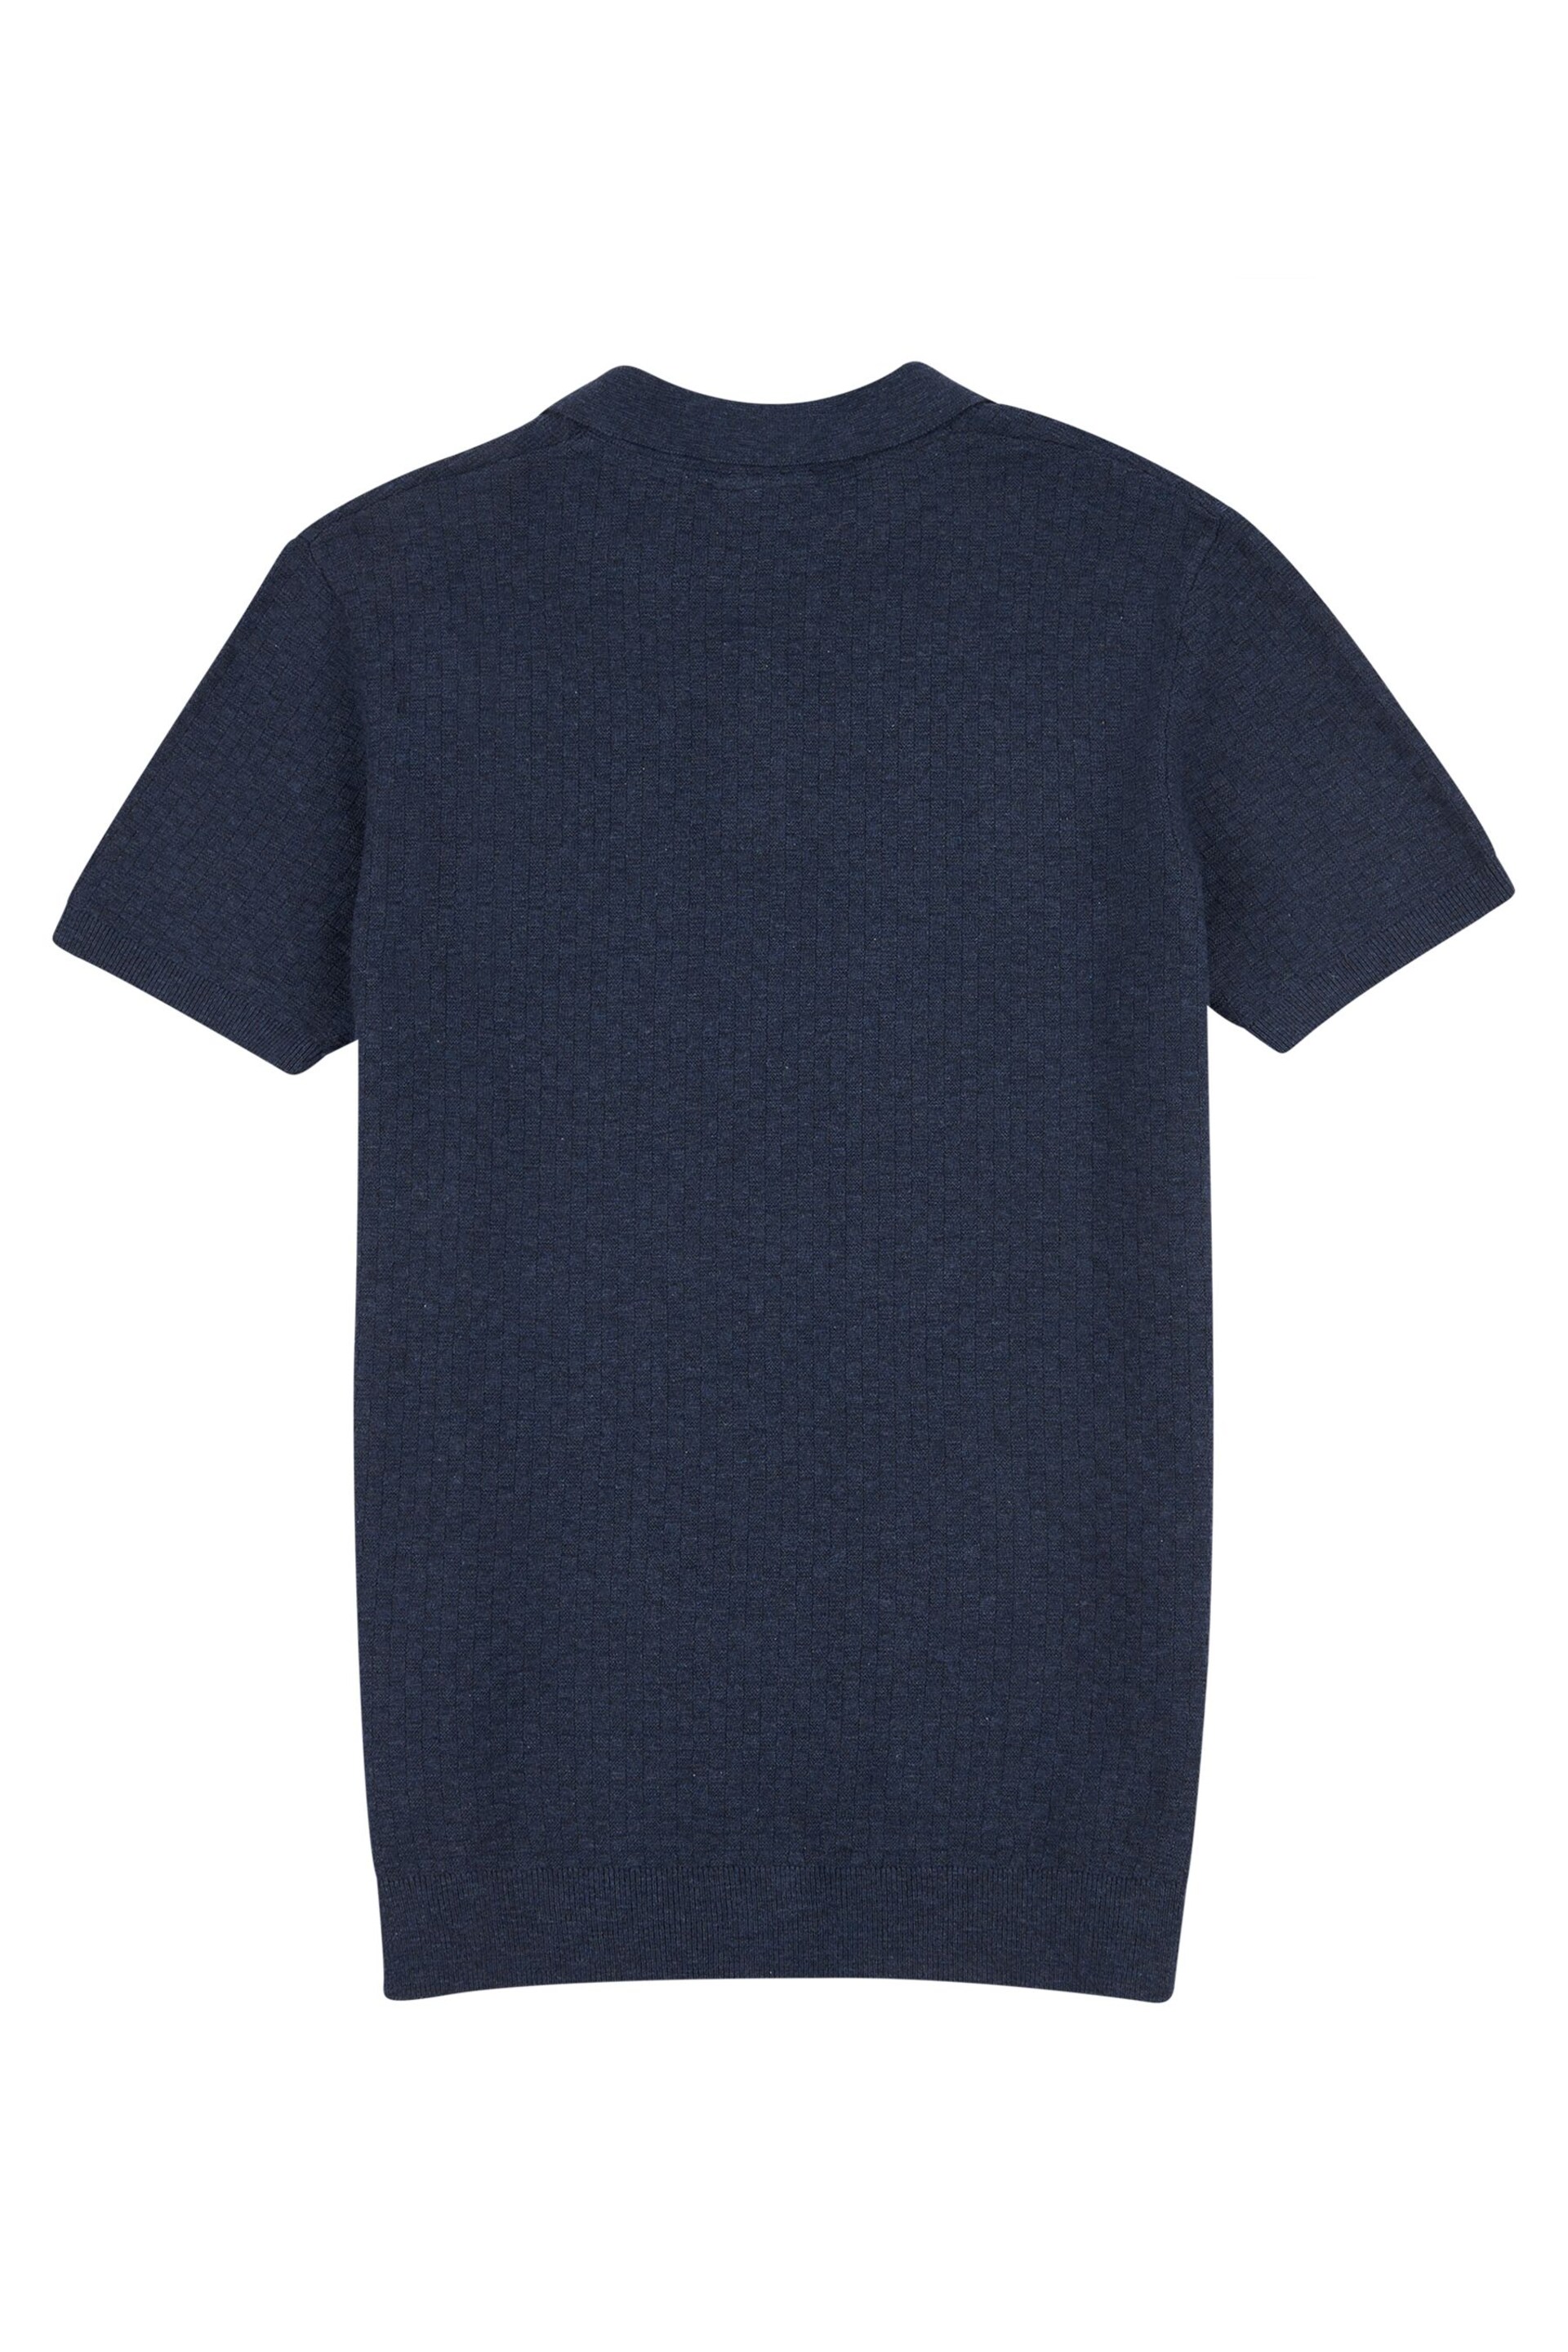 U.S. Polo Assn. Mens Regular Fit Blue Texture Knit Polo Shirt - Image 6 of 7